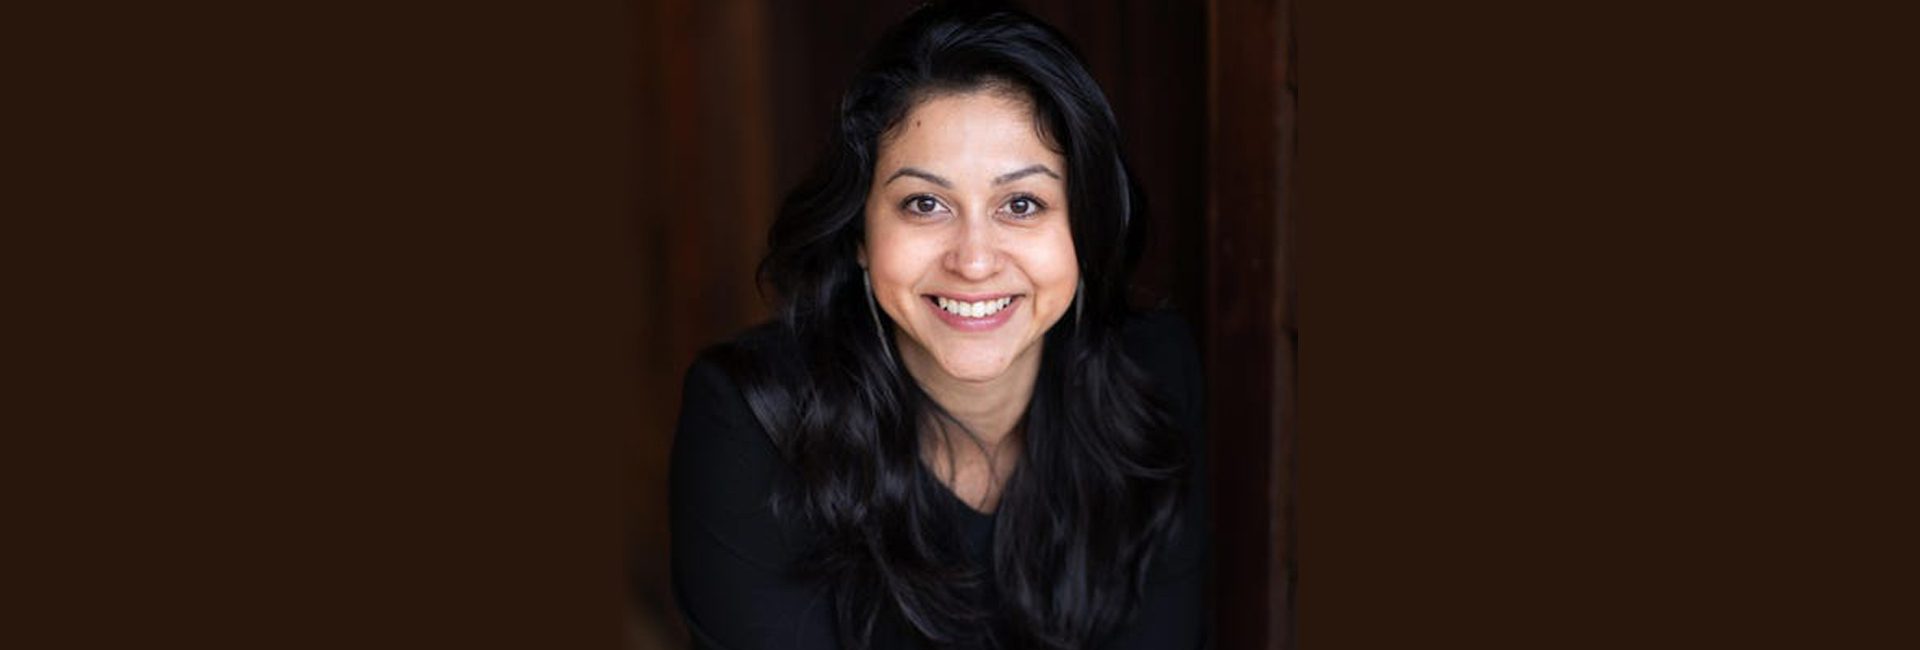 Indiase ondernemer| Neha Narkhede | Wereldwijde indiaan